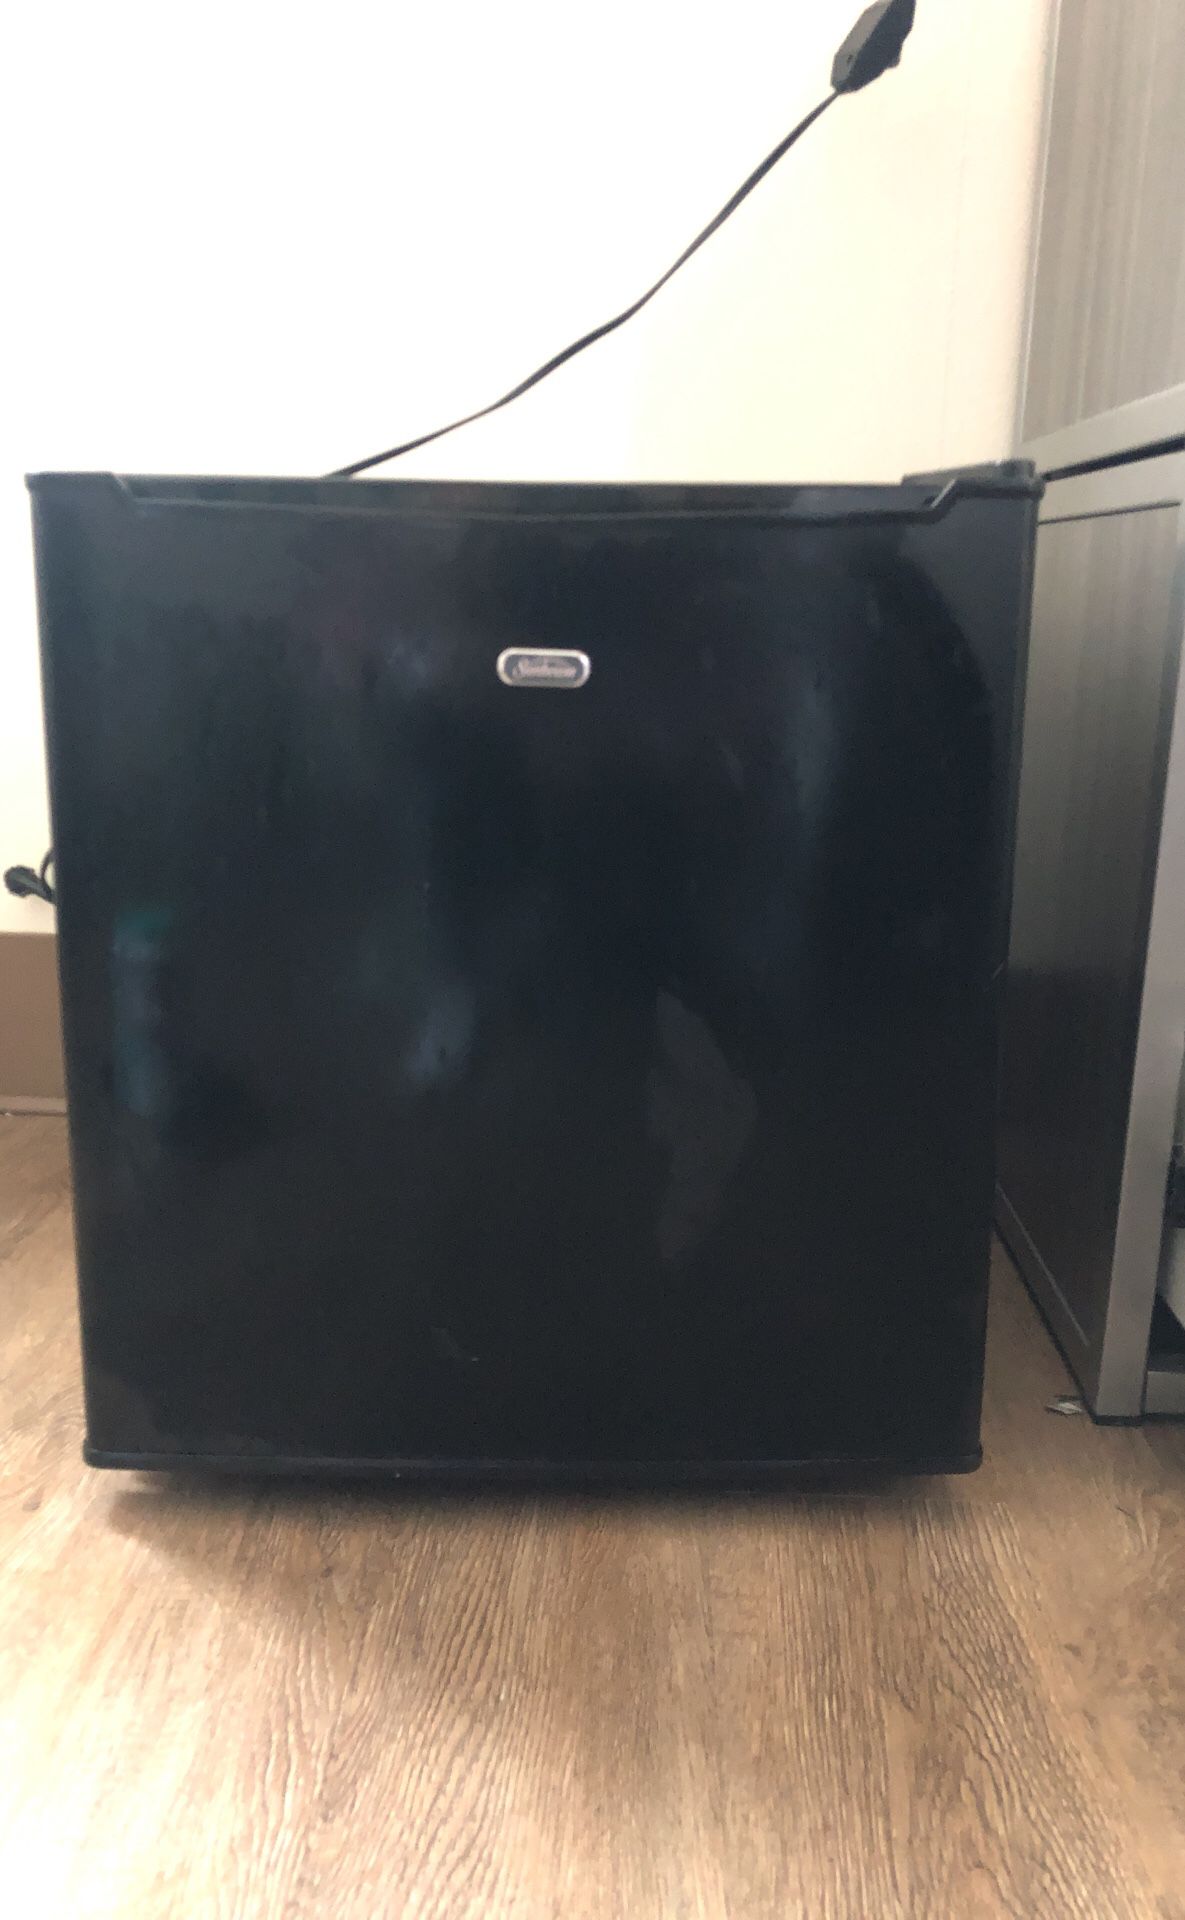 Sunbeam 1.7 cu ft Mini Refrigerator Black